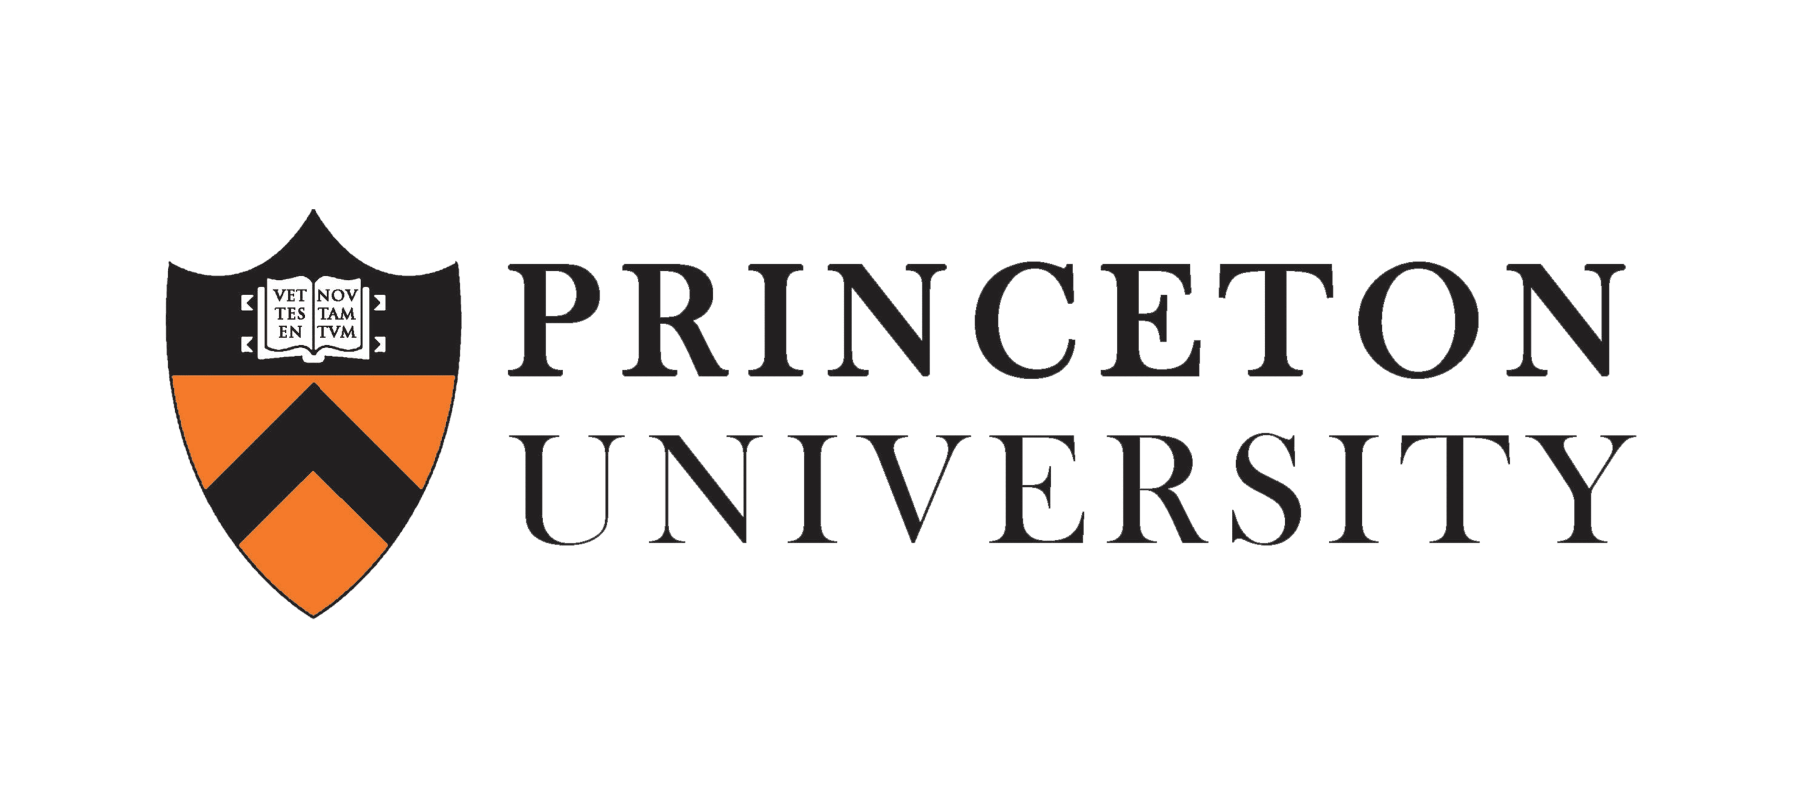 University of Princeton